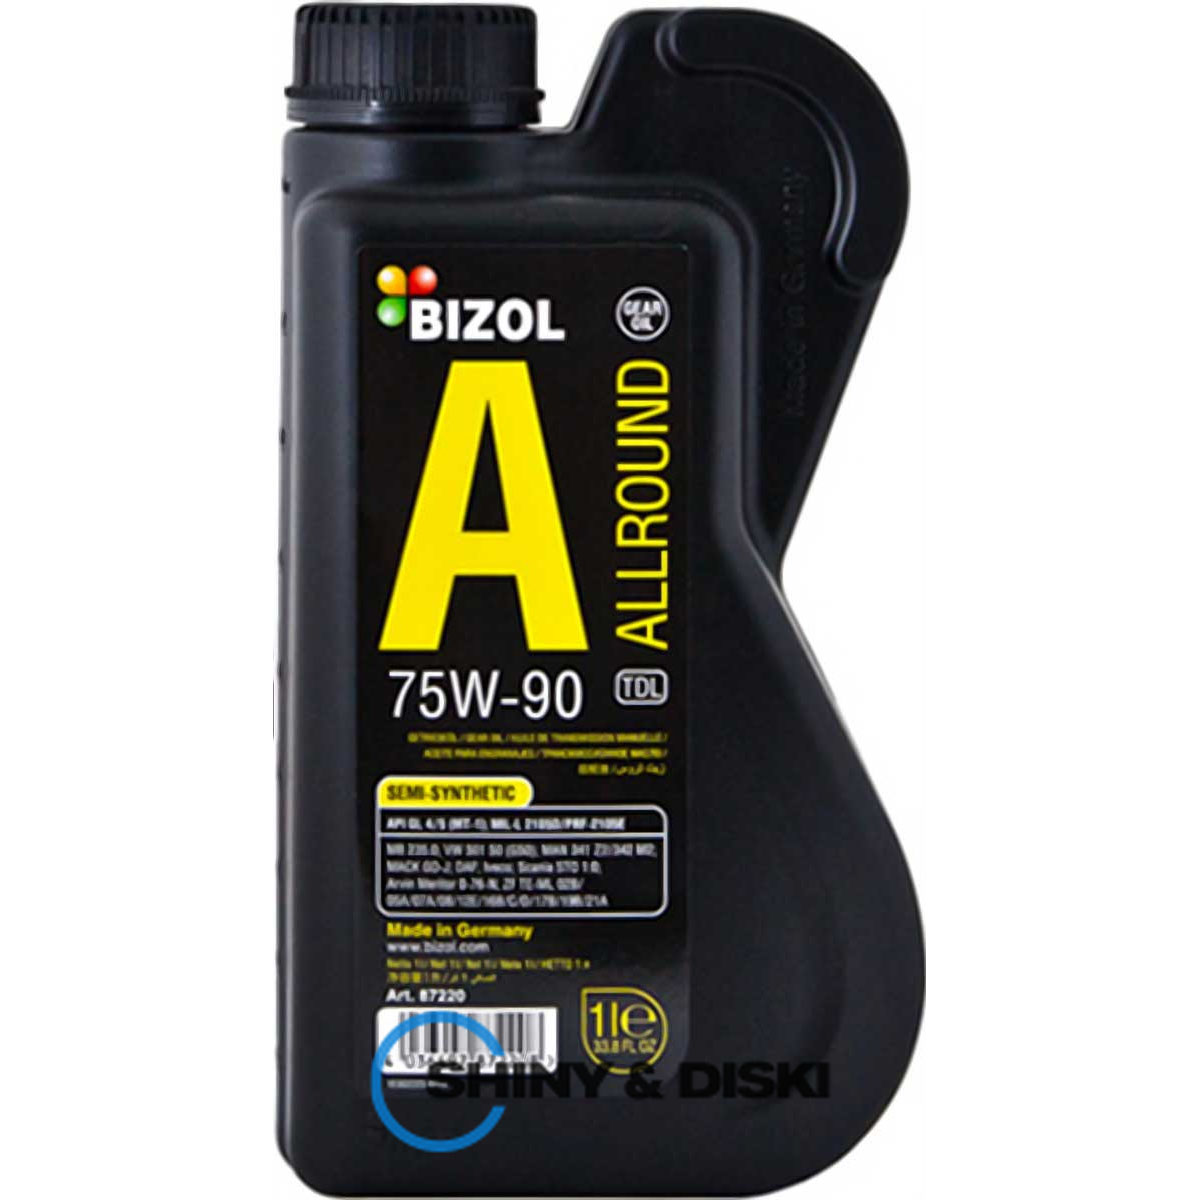 bizol allround gear oil tdl 75w-90 (1л)